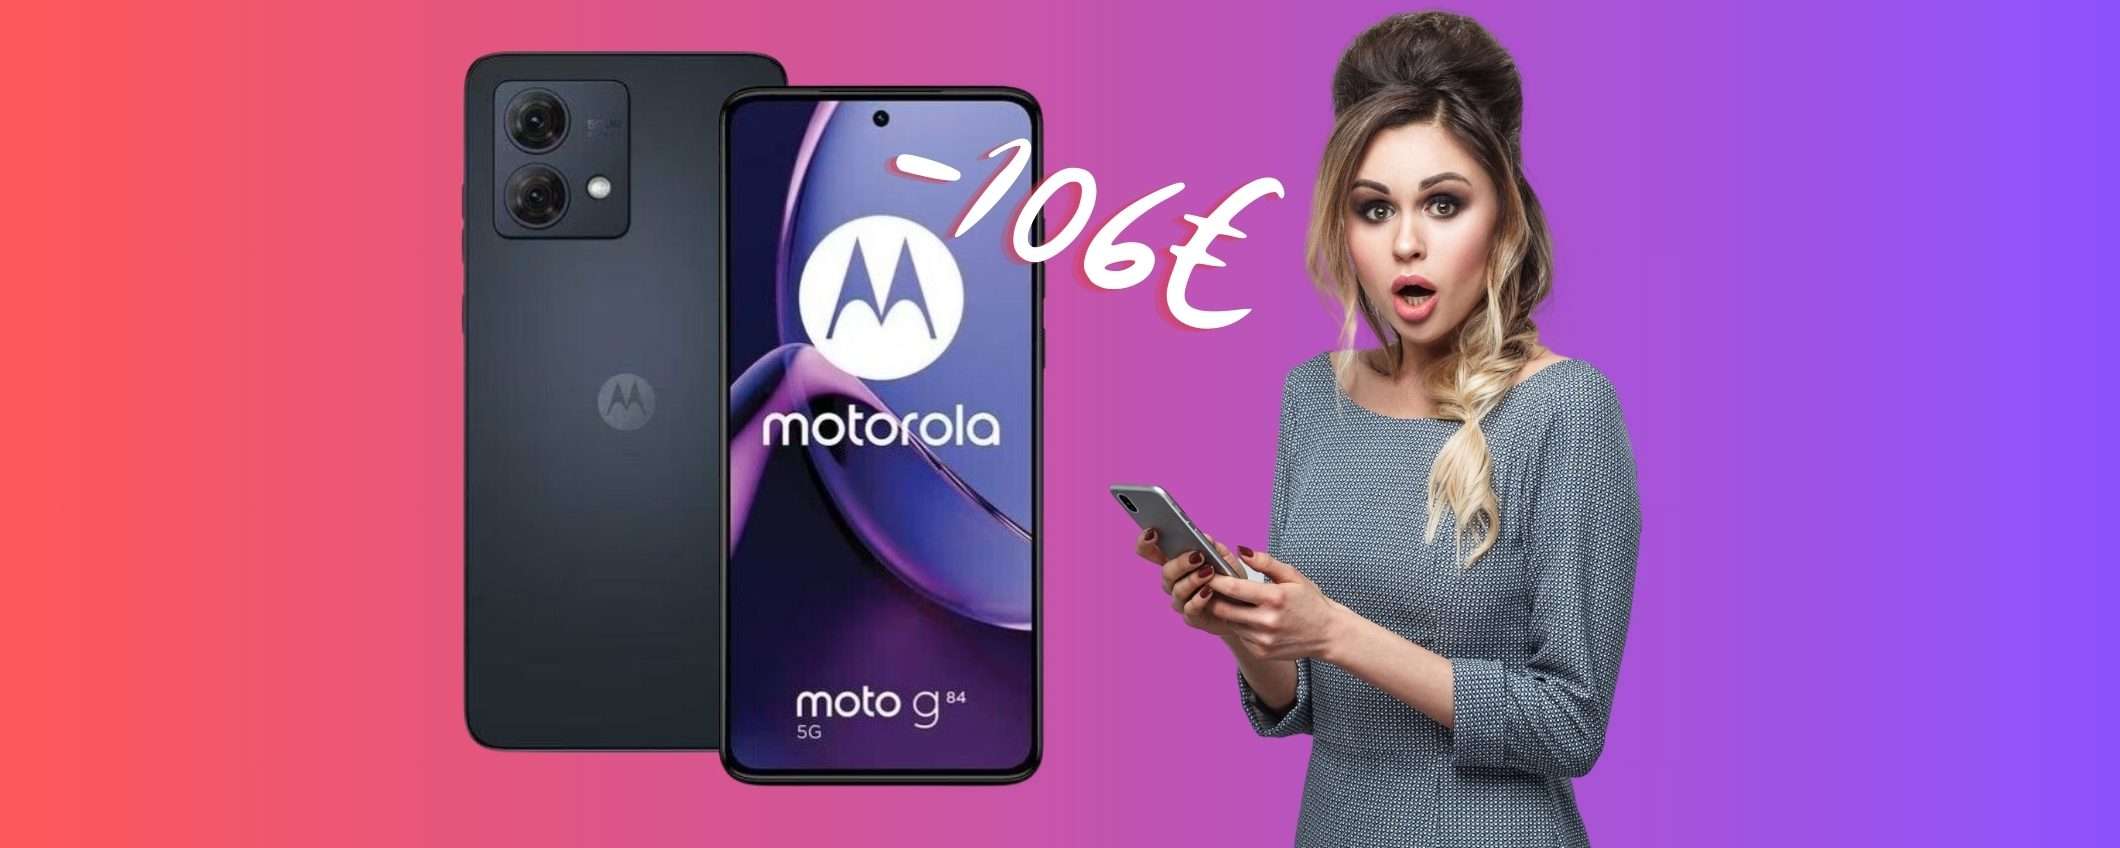 Motorola Moto G84 5G da 256GB Dual Sim in SCONTO BOMBA di 106€